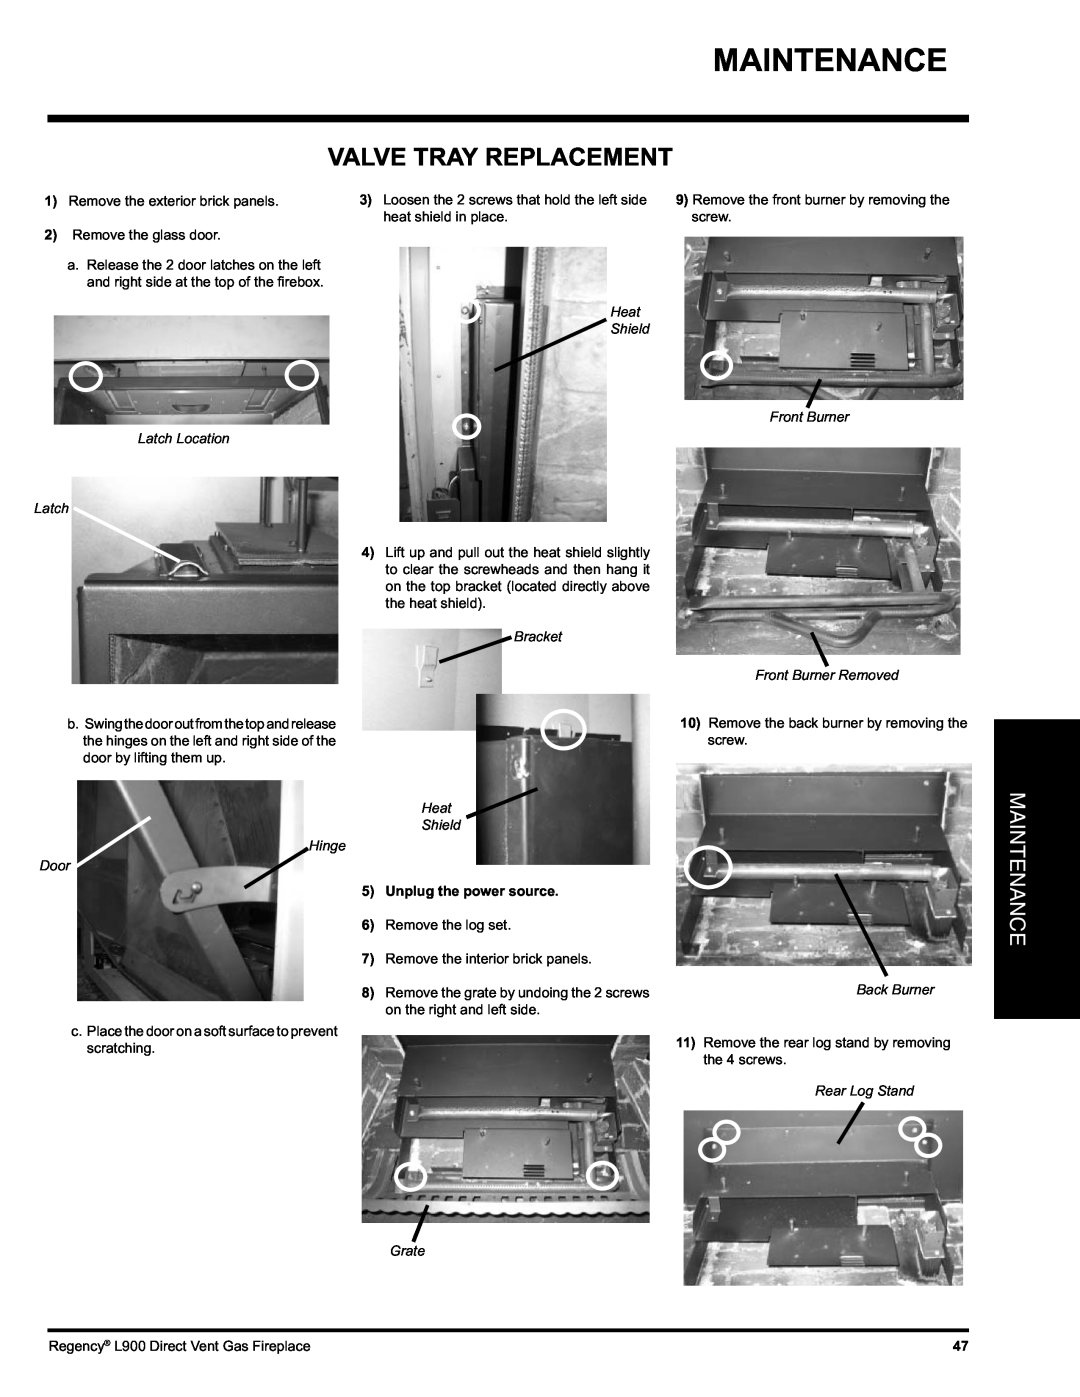 Regency L900-NG, L900-LP Maintenance, Valve Tray Replacement, Latch Location Latch, Bracket, Heat Shield Hinge Door 